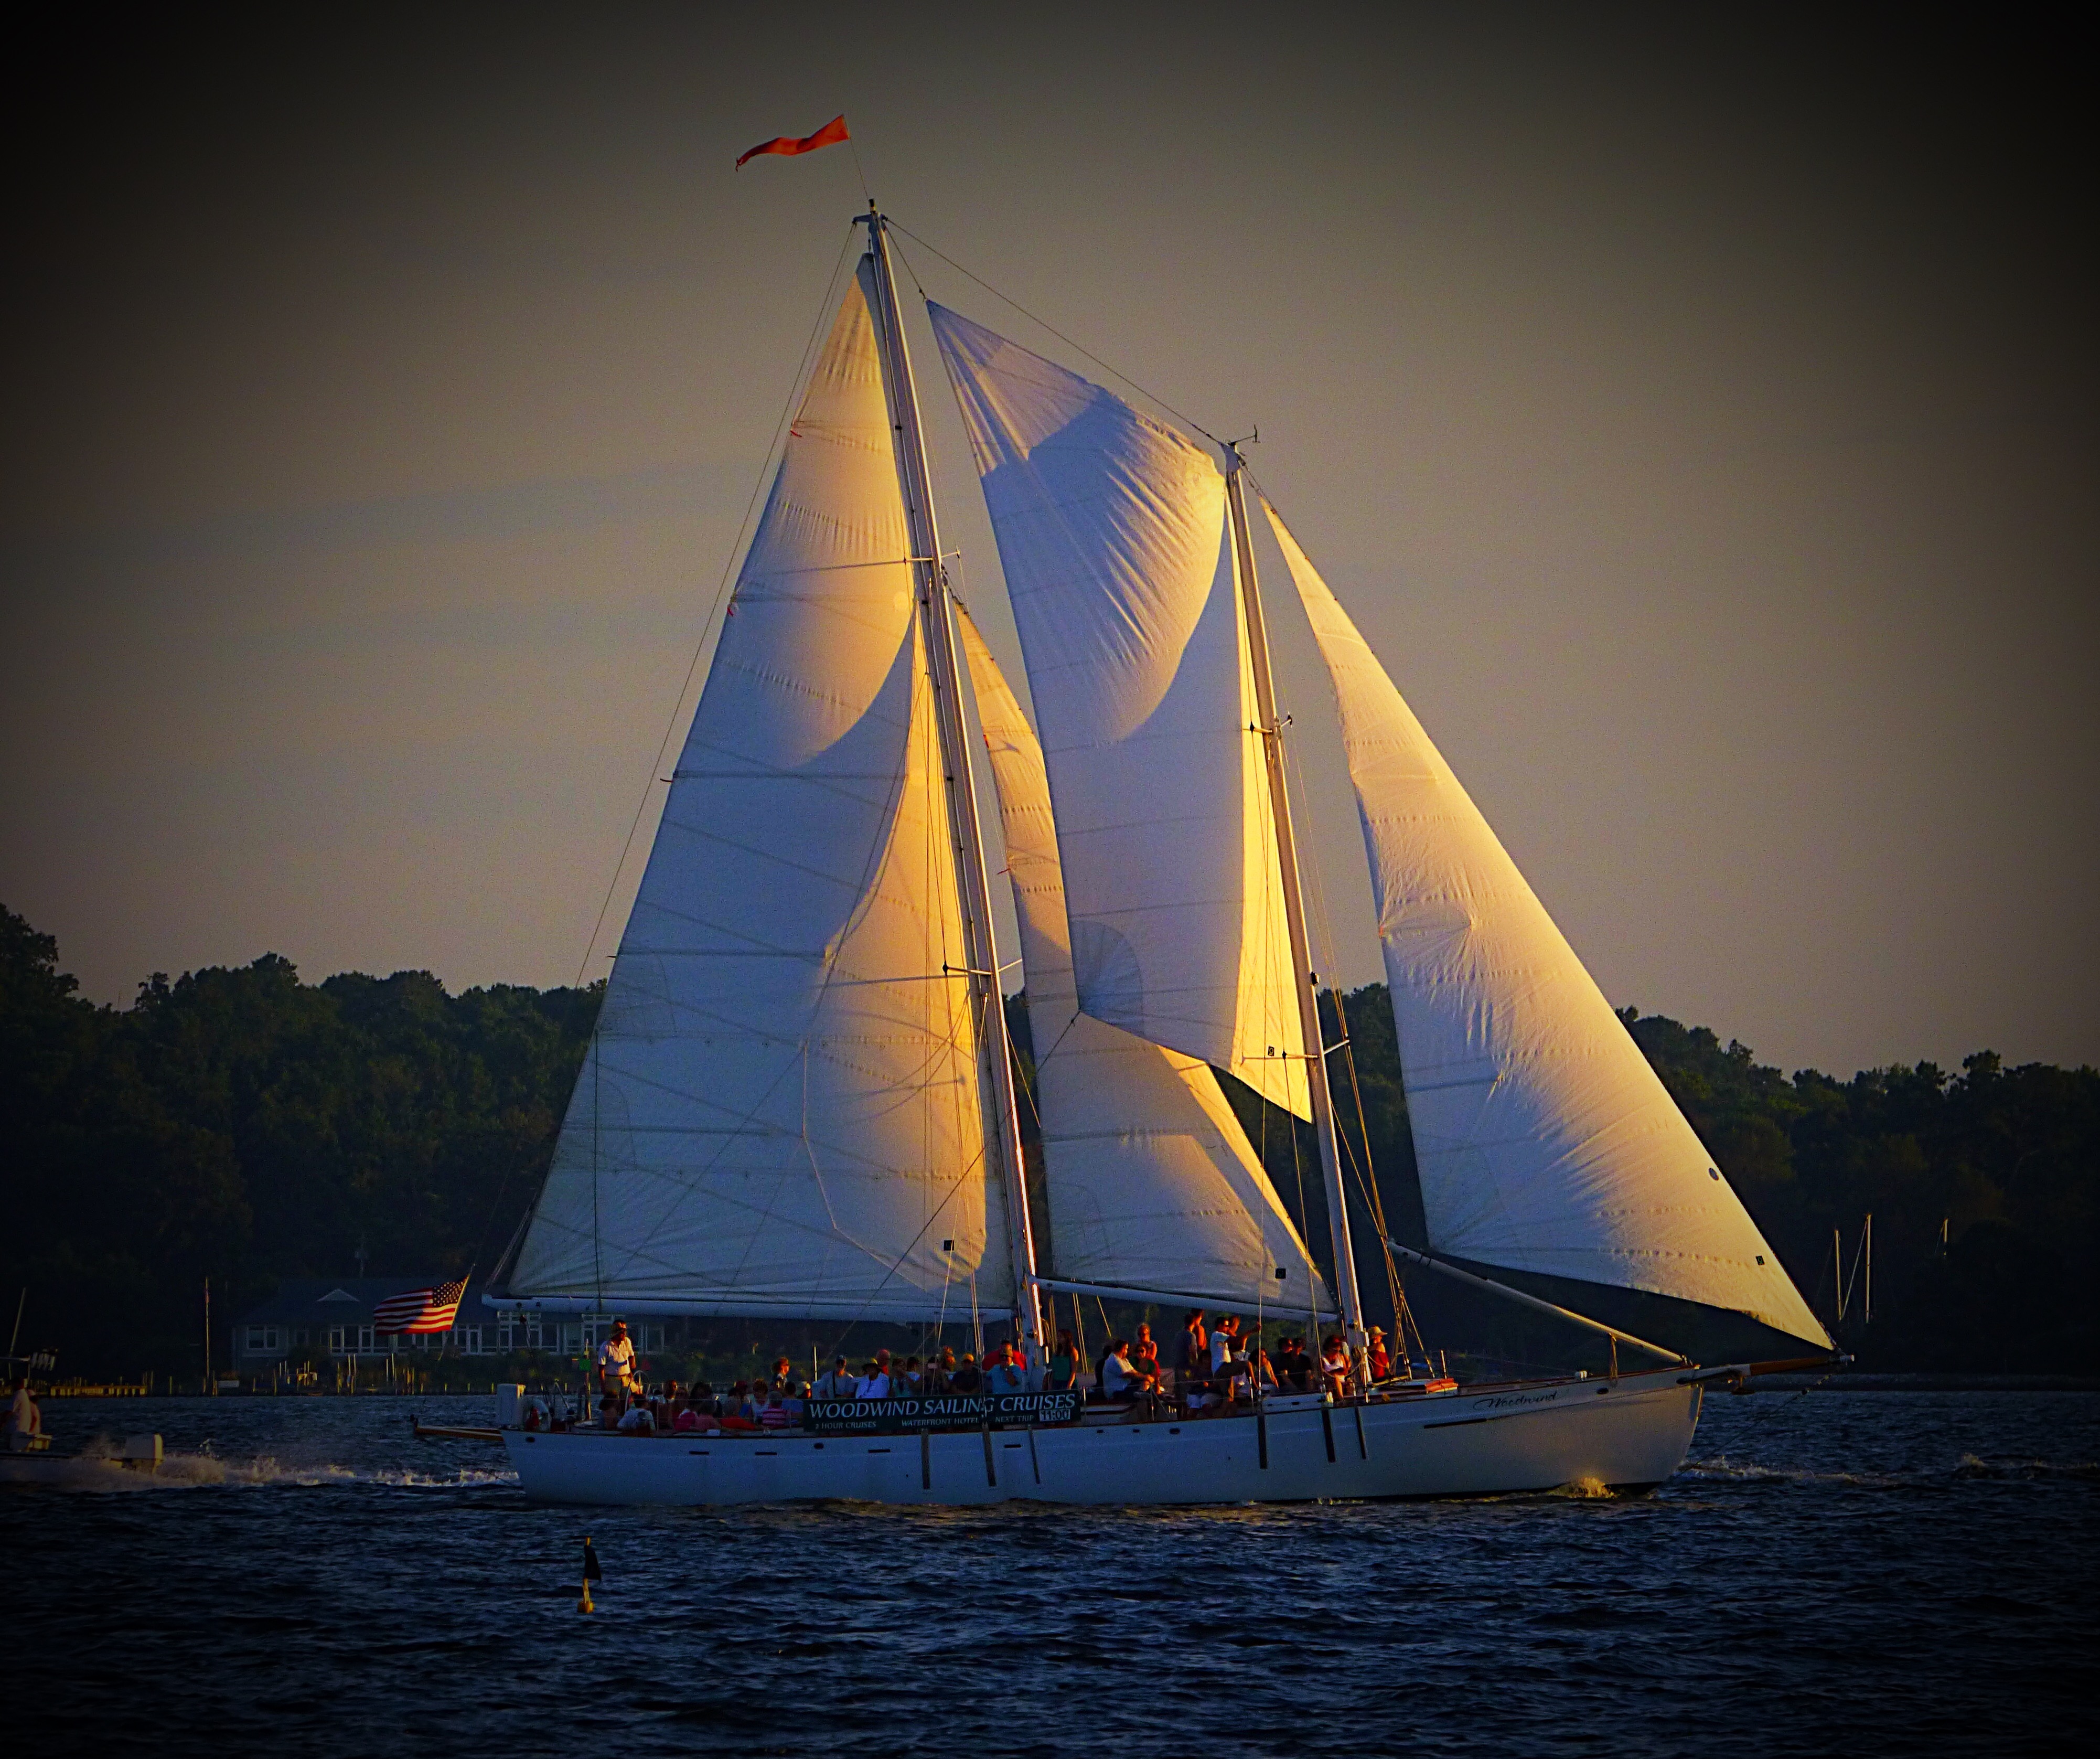 The schooner under full sail half in sunlight half in darkness